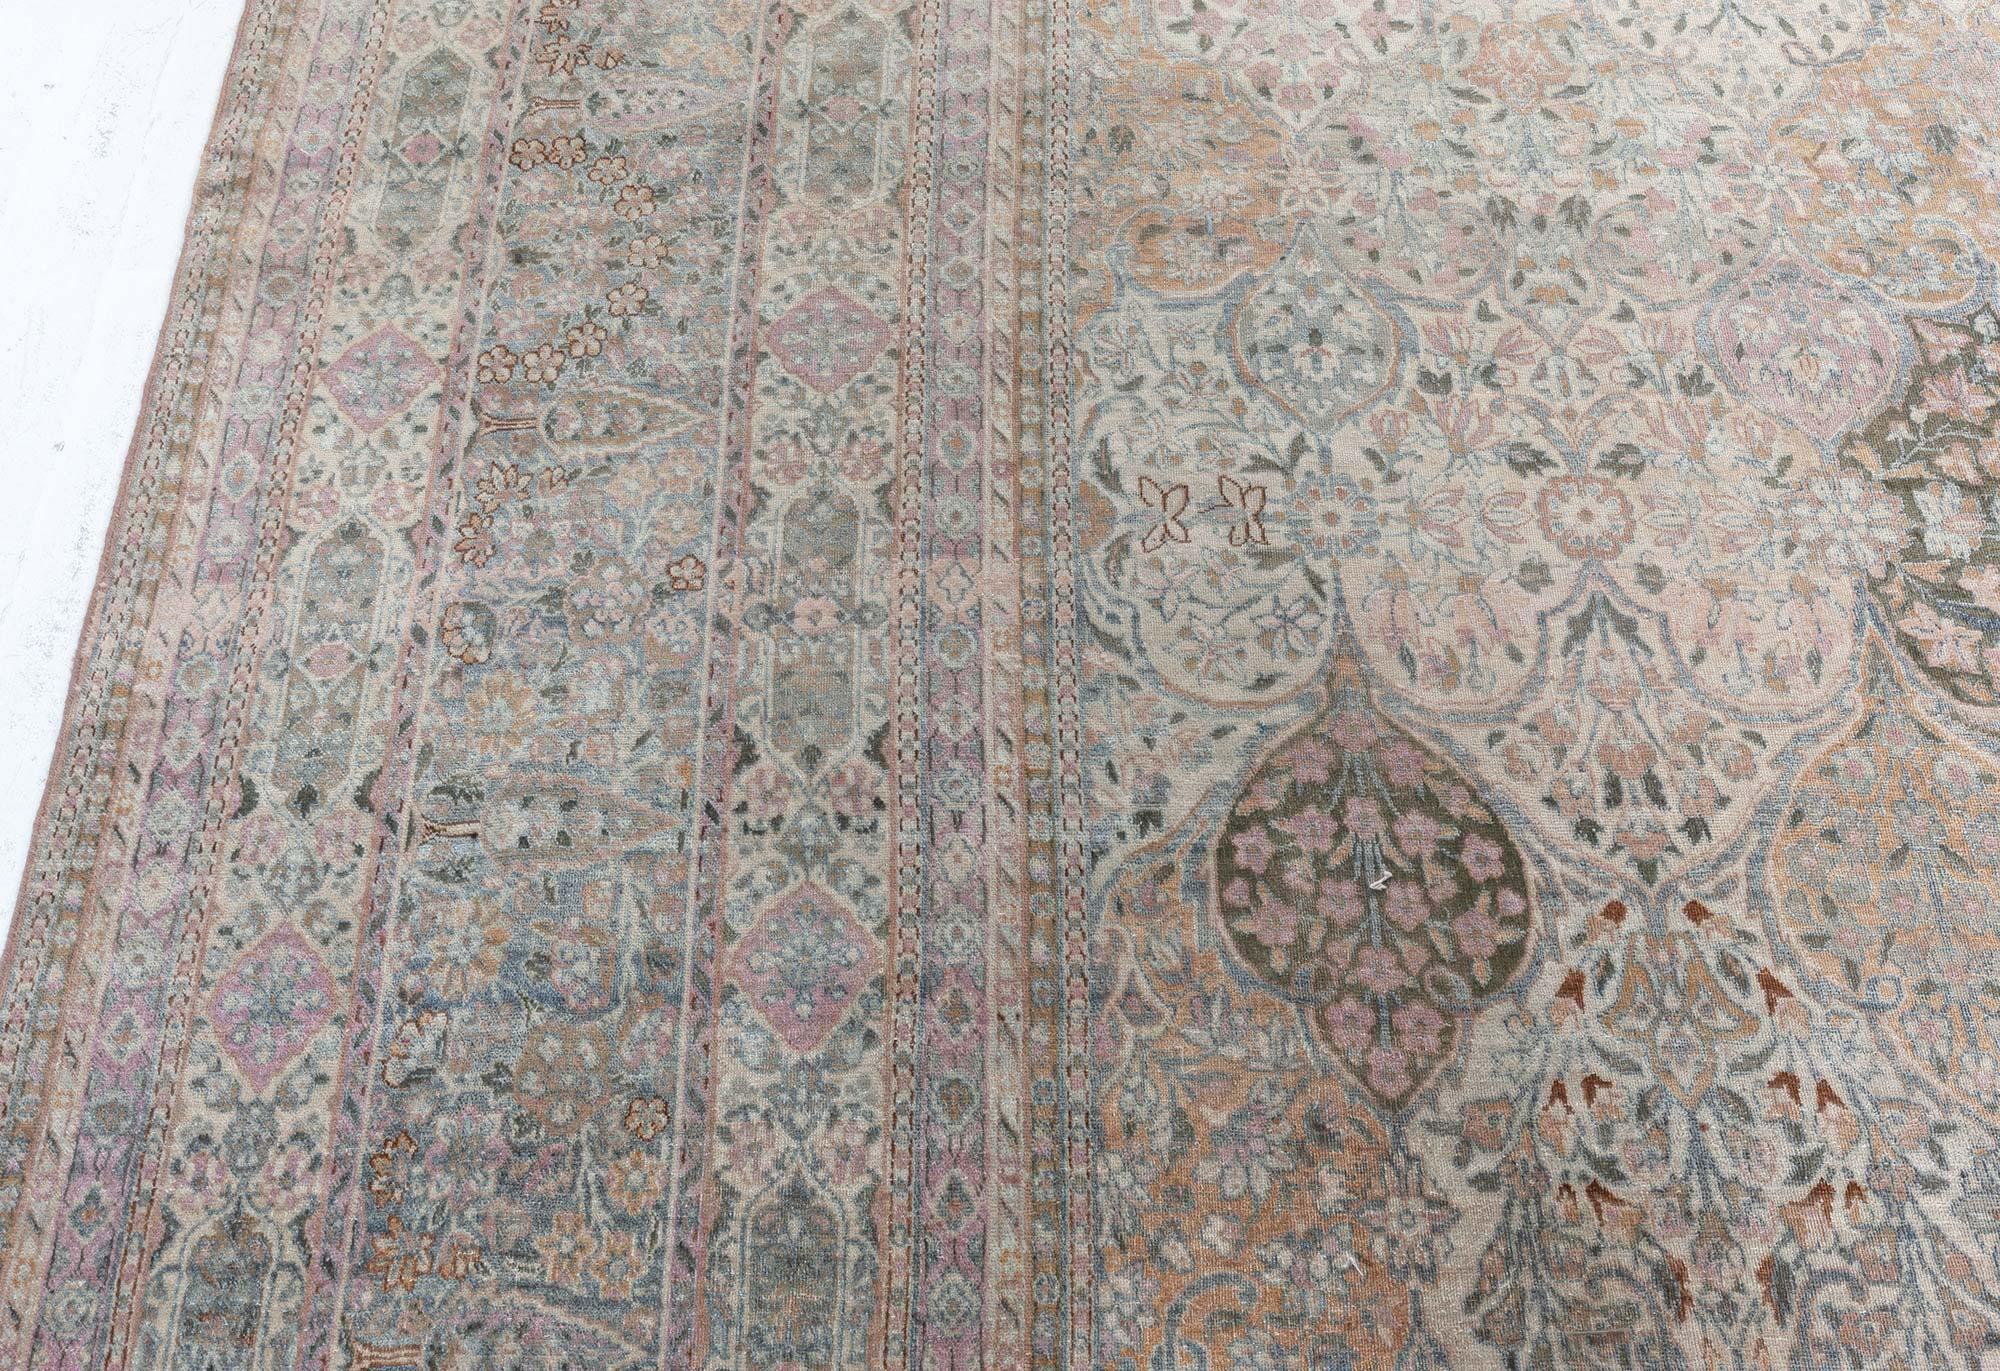 Antique Persian Kirman Rug
Size: 13'3